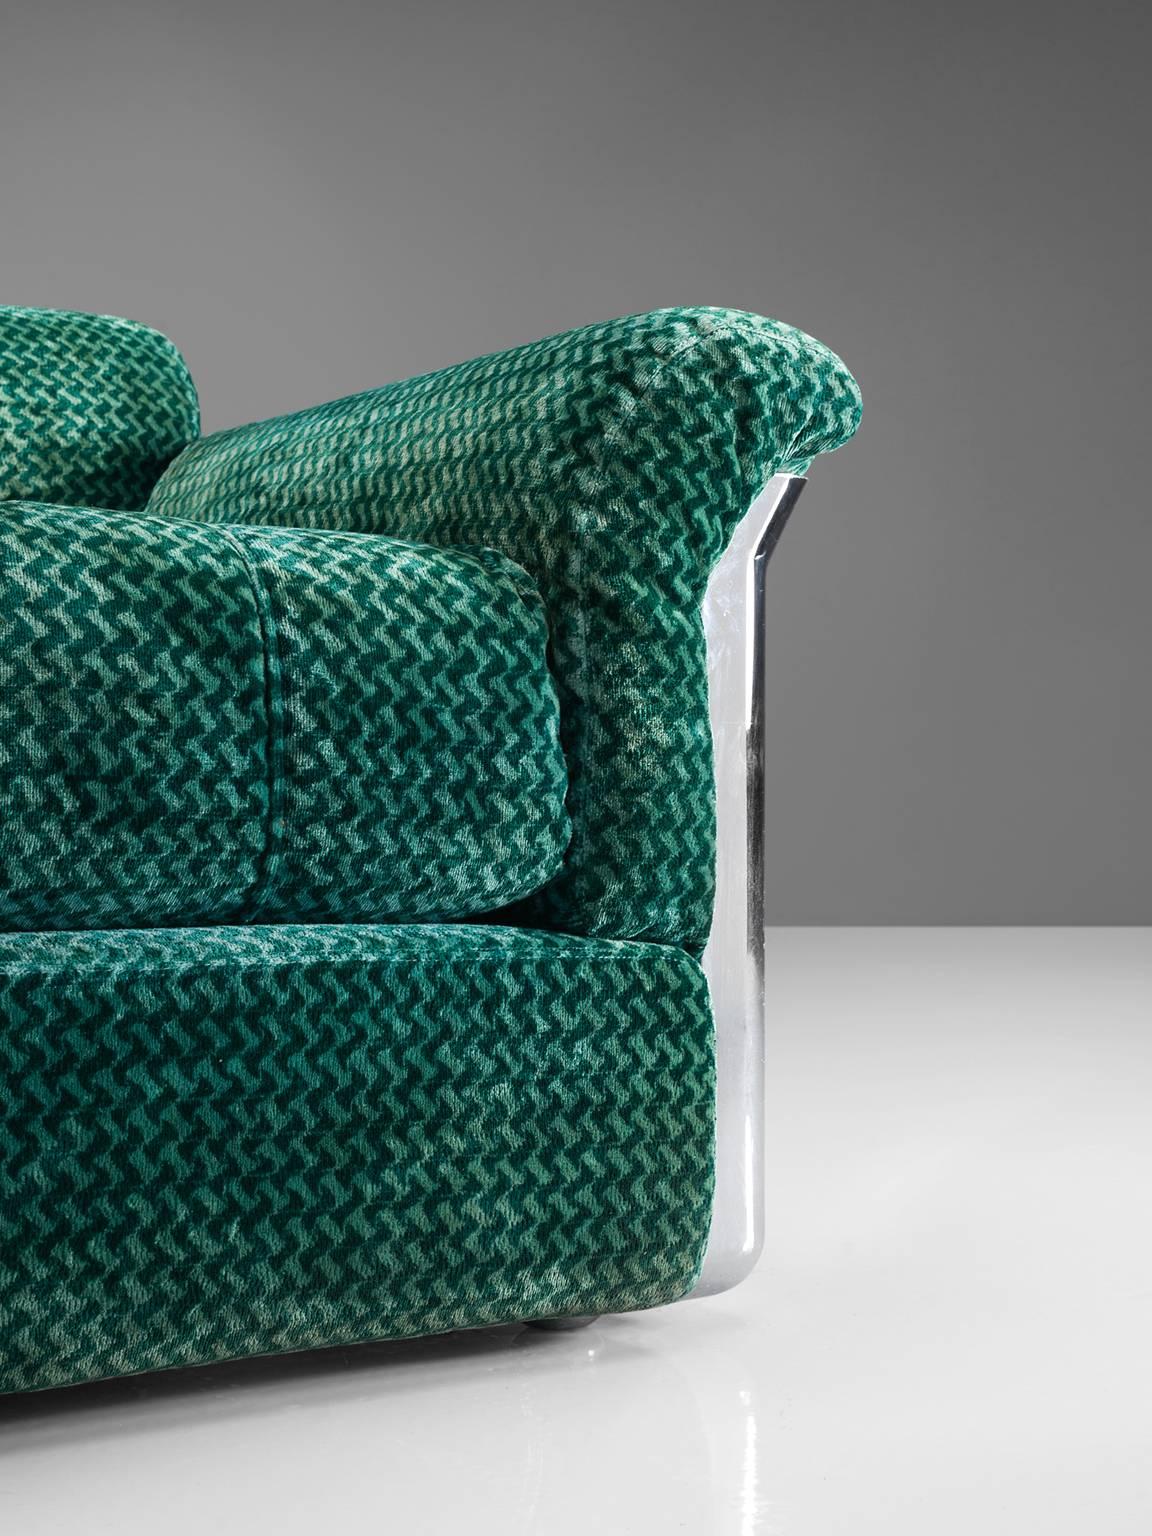 Aluminum Vittorio Introini Set of Two Rare 'Larissa' Lounge Chairs for Saporiti